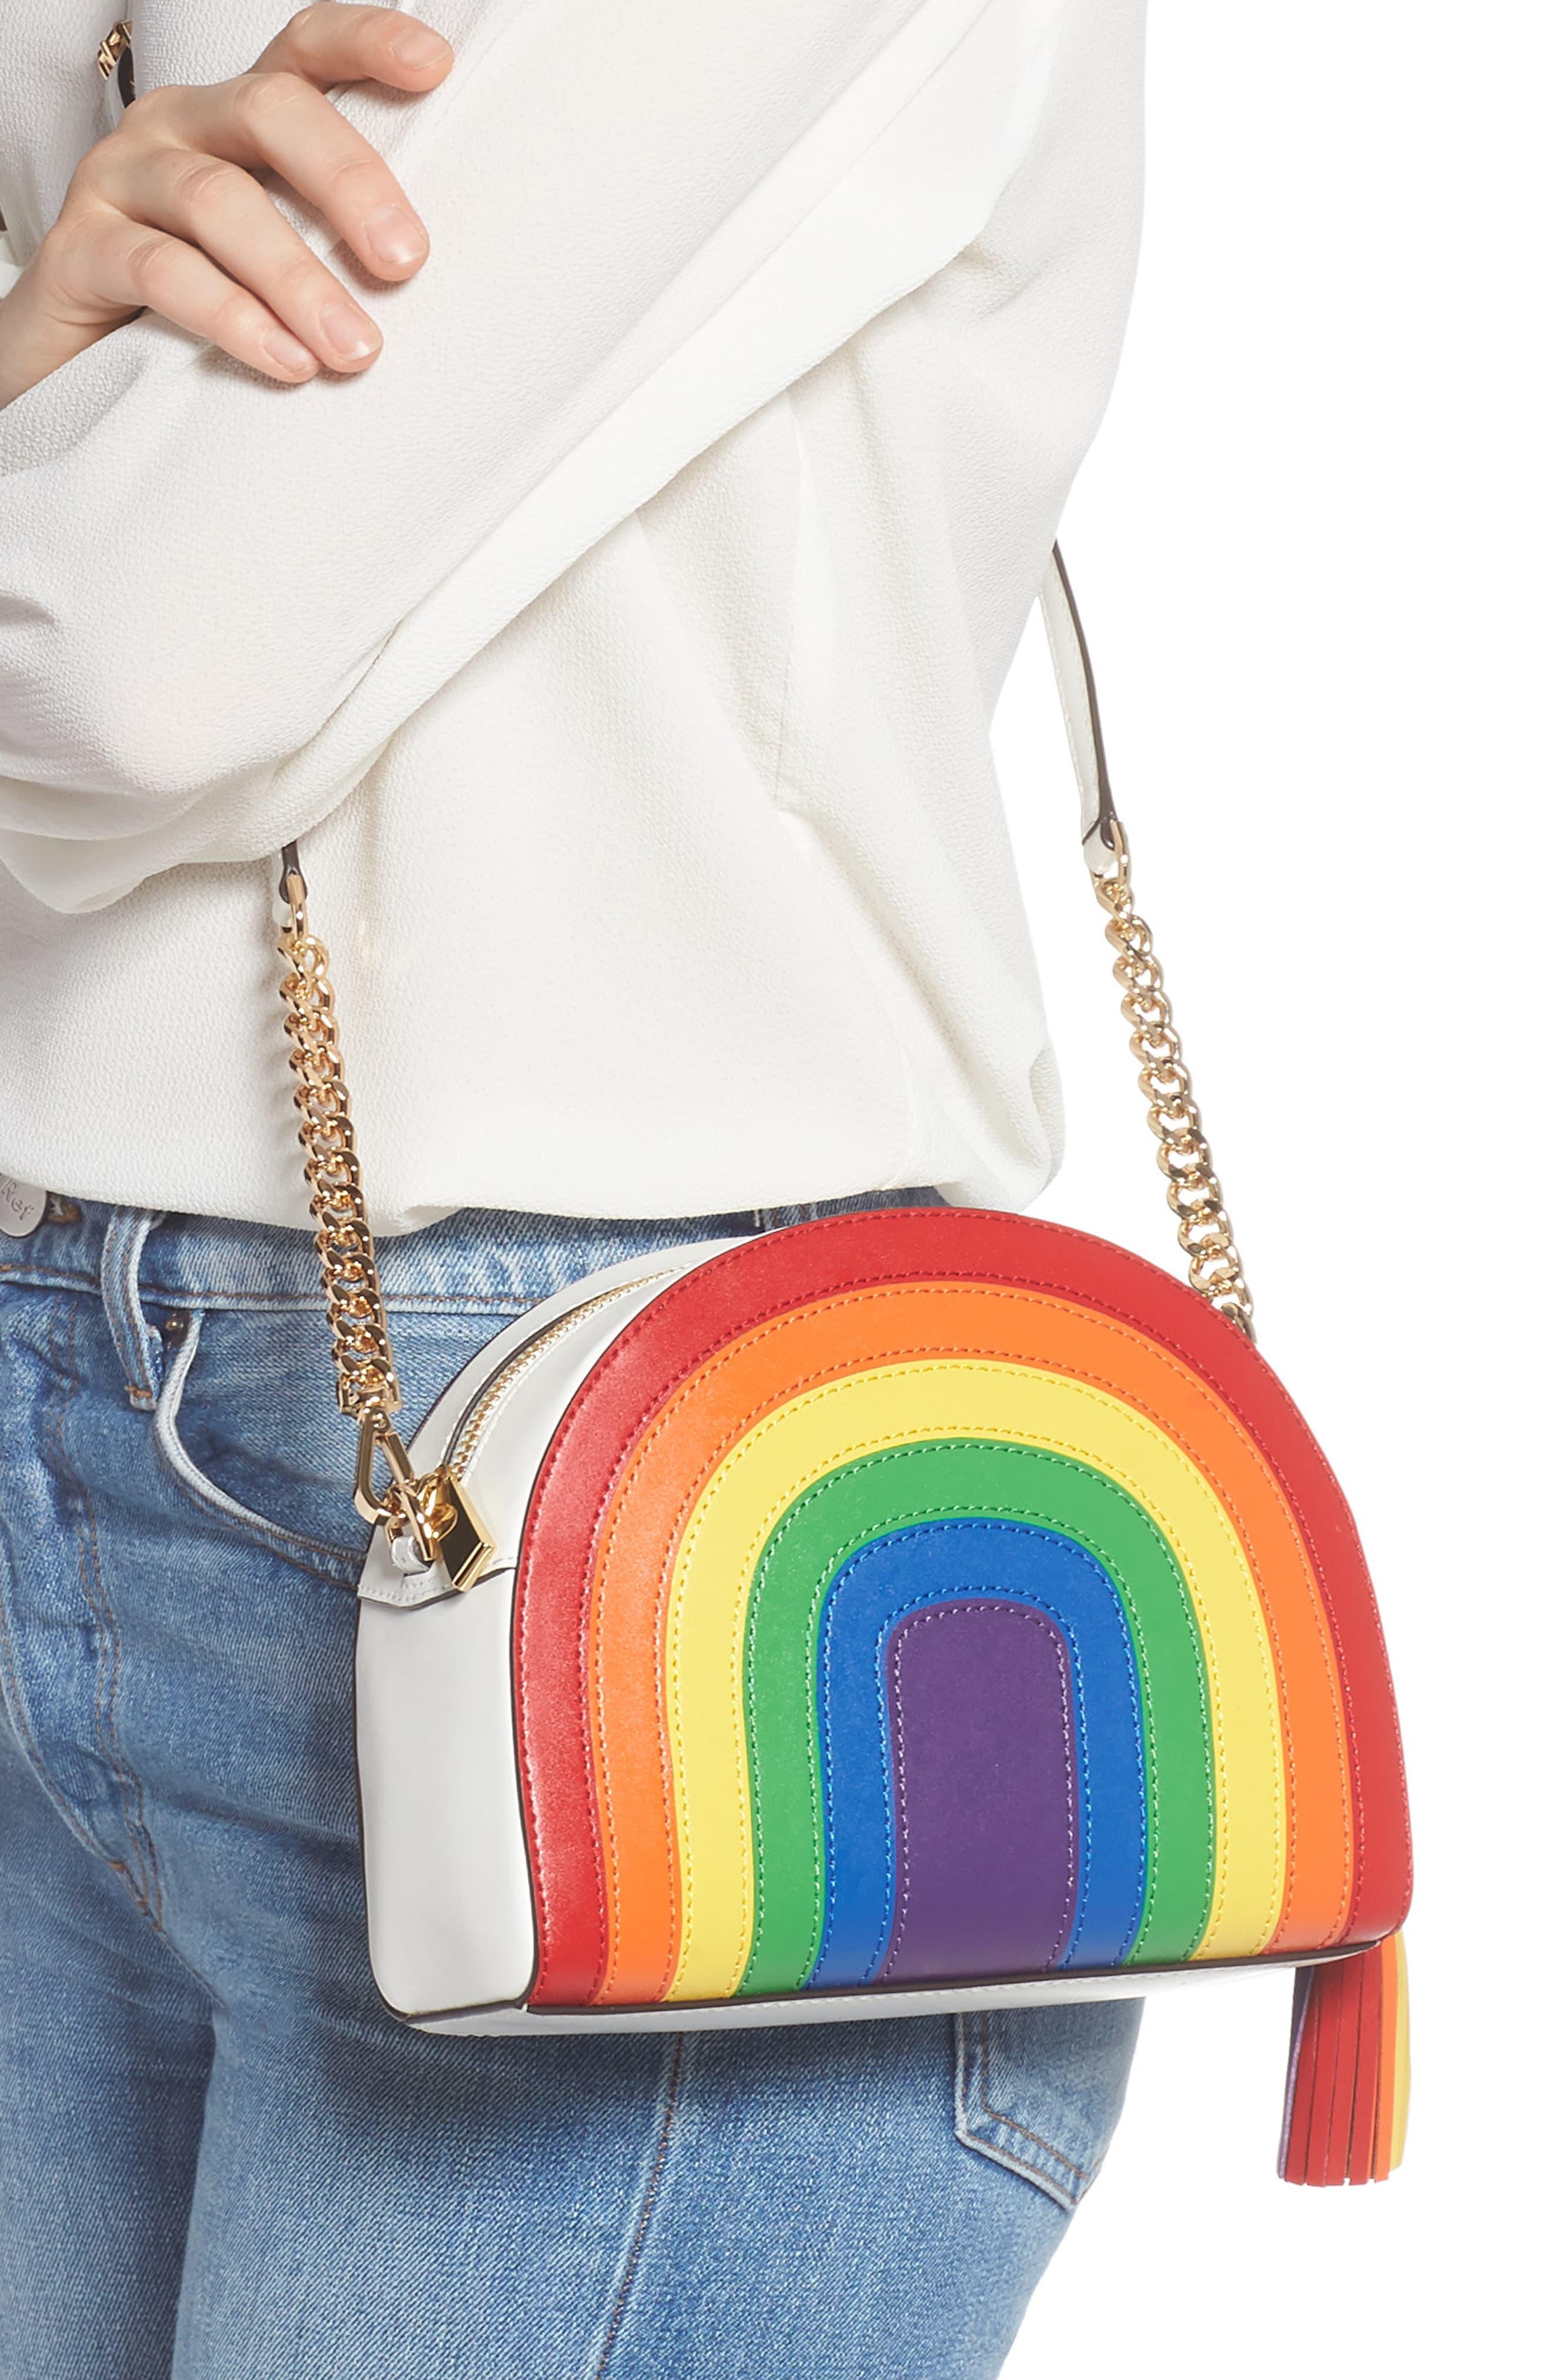 michael kors rainbow handbag